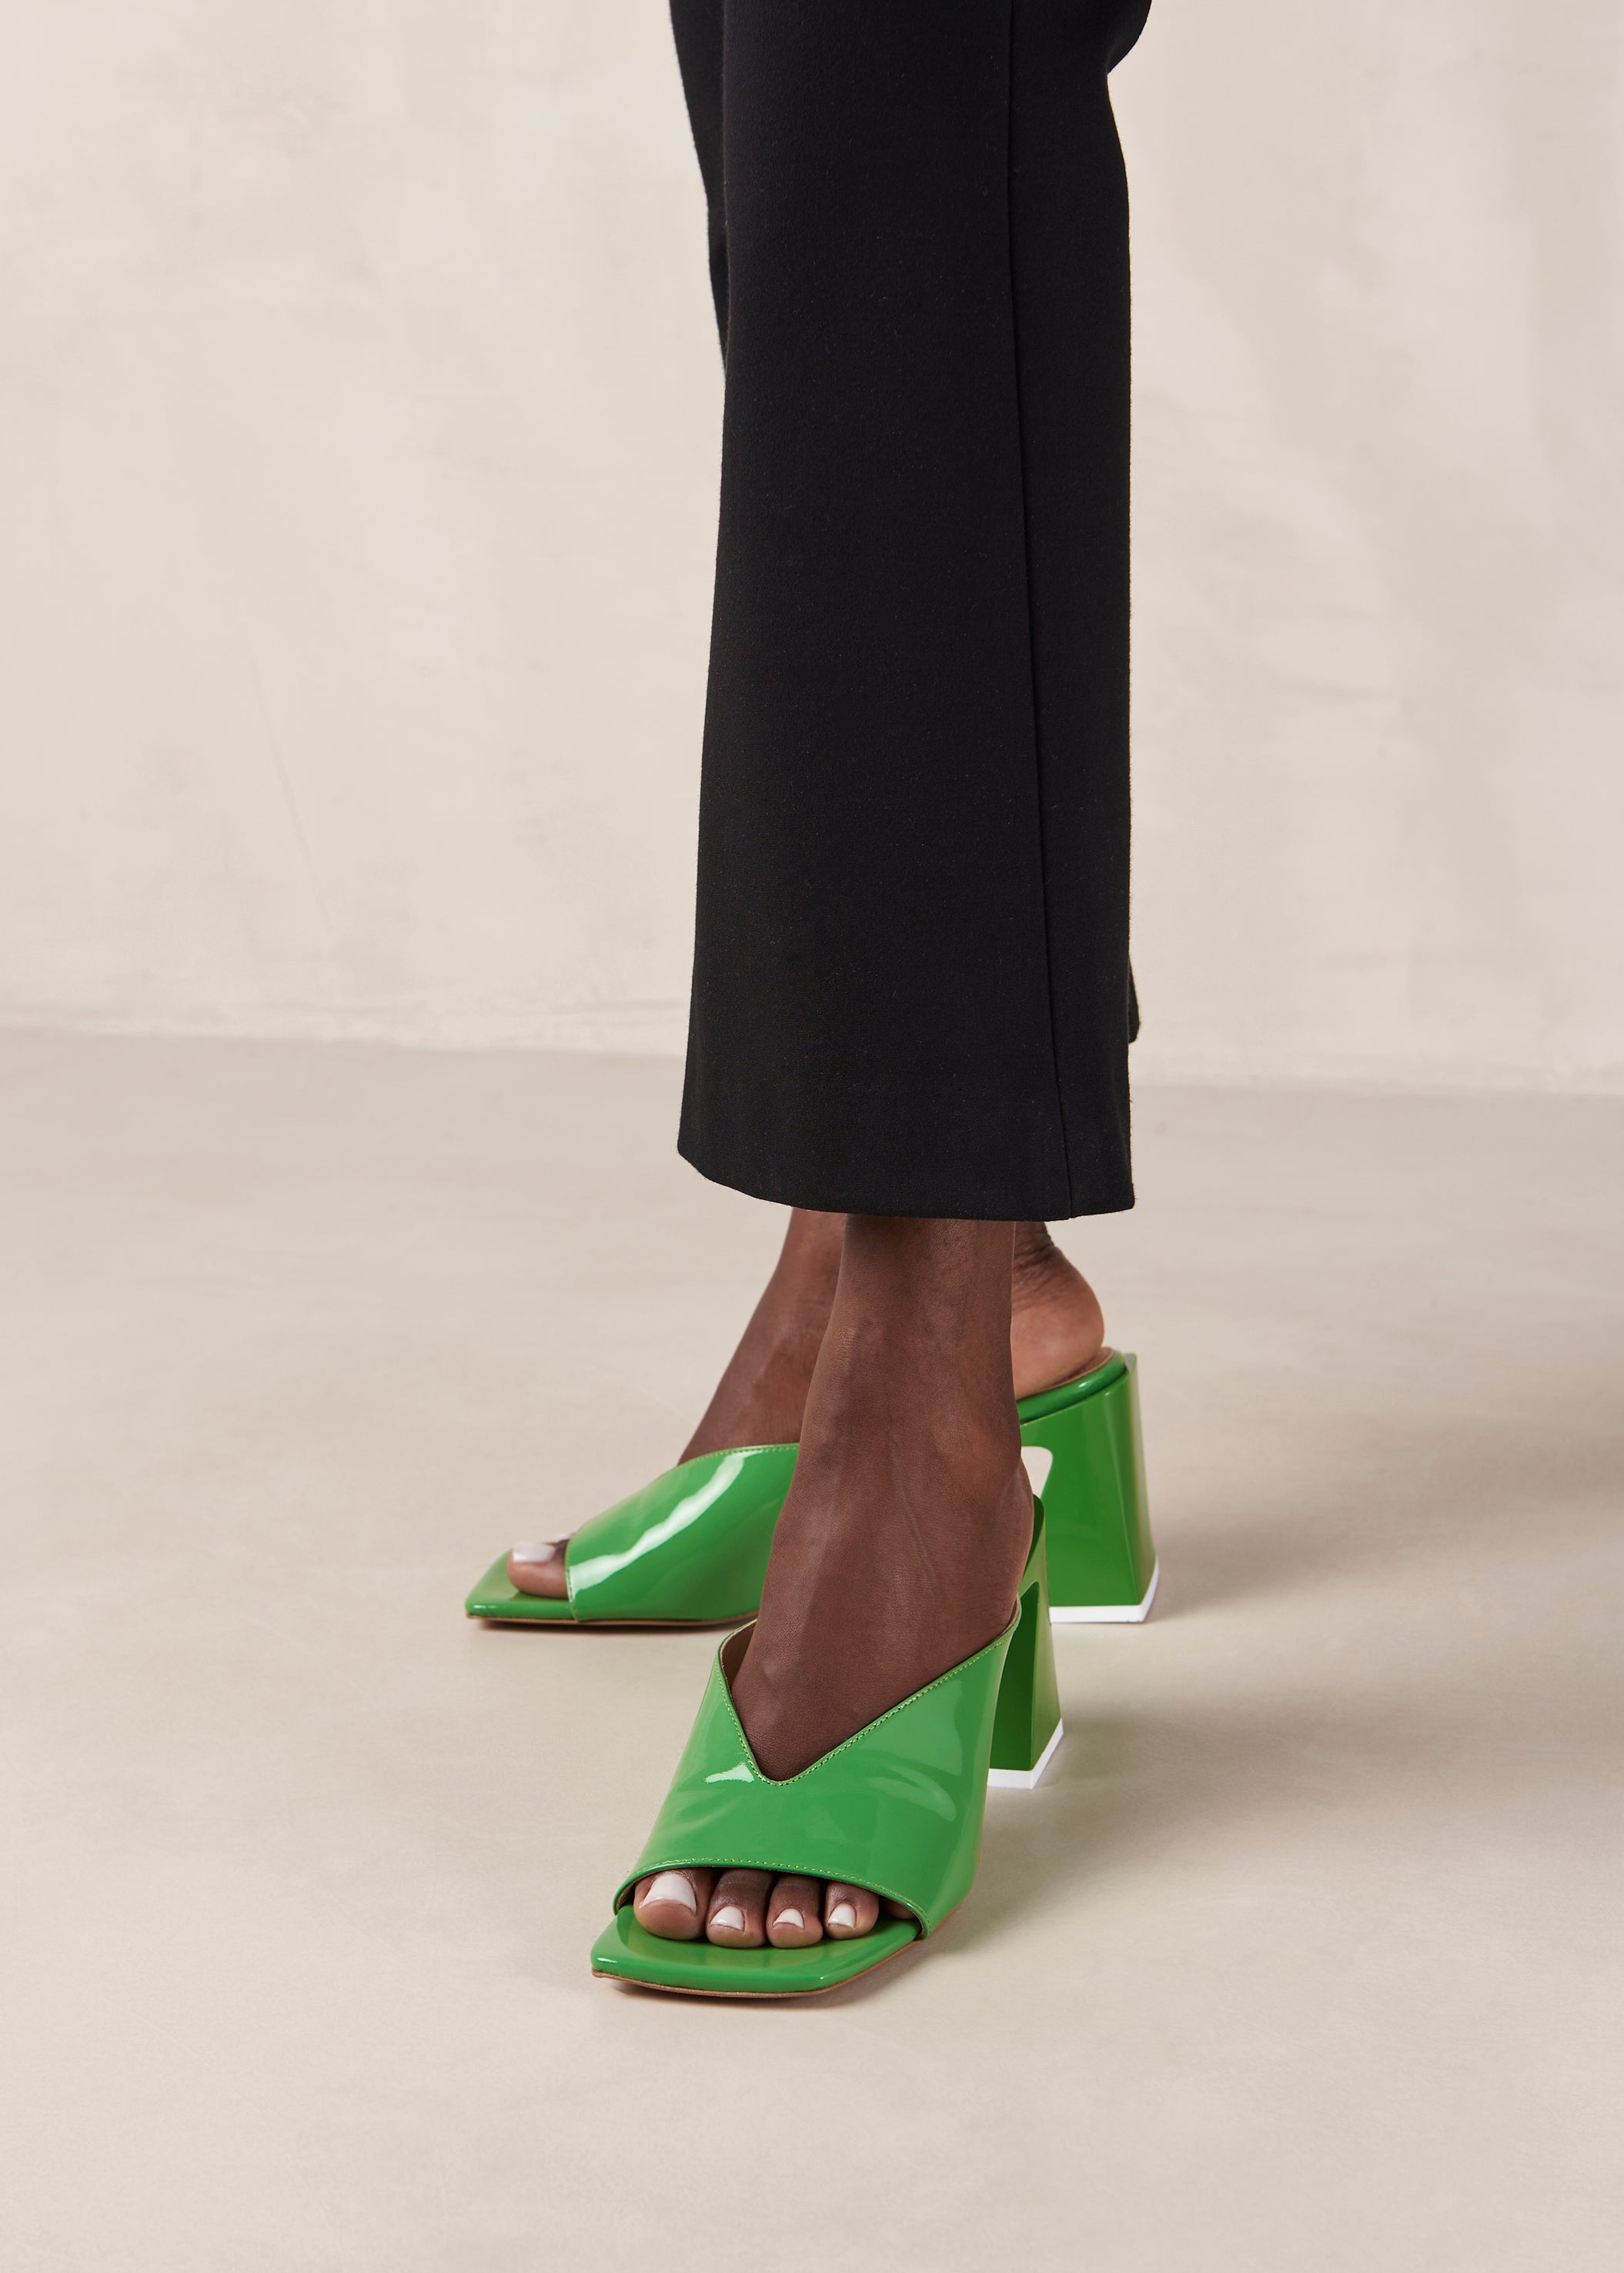 ALOHAS-OUTLET-SALE-Tasha-Green-Leather-Sandals-Sandalen-ARCHIVE-COLLECTION-4.jpg